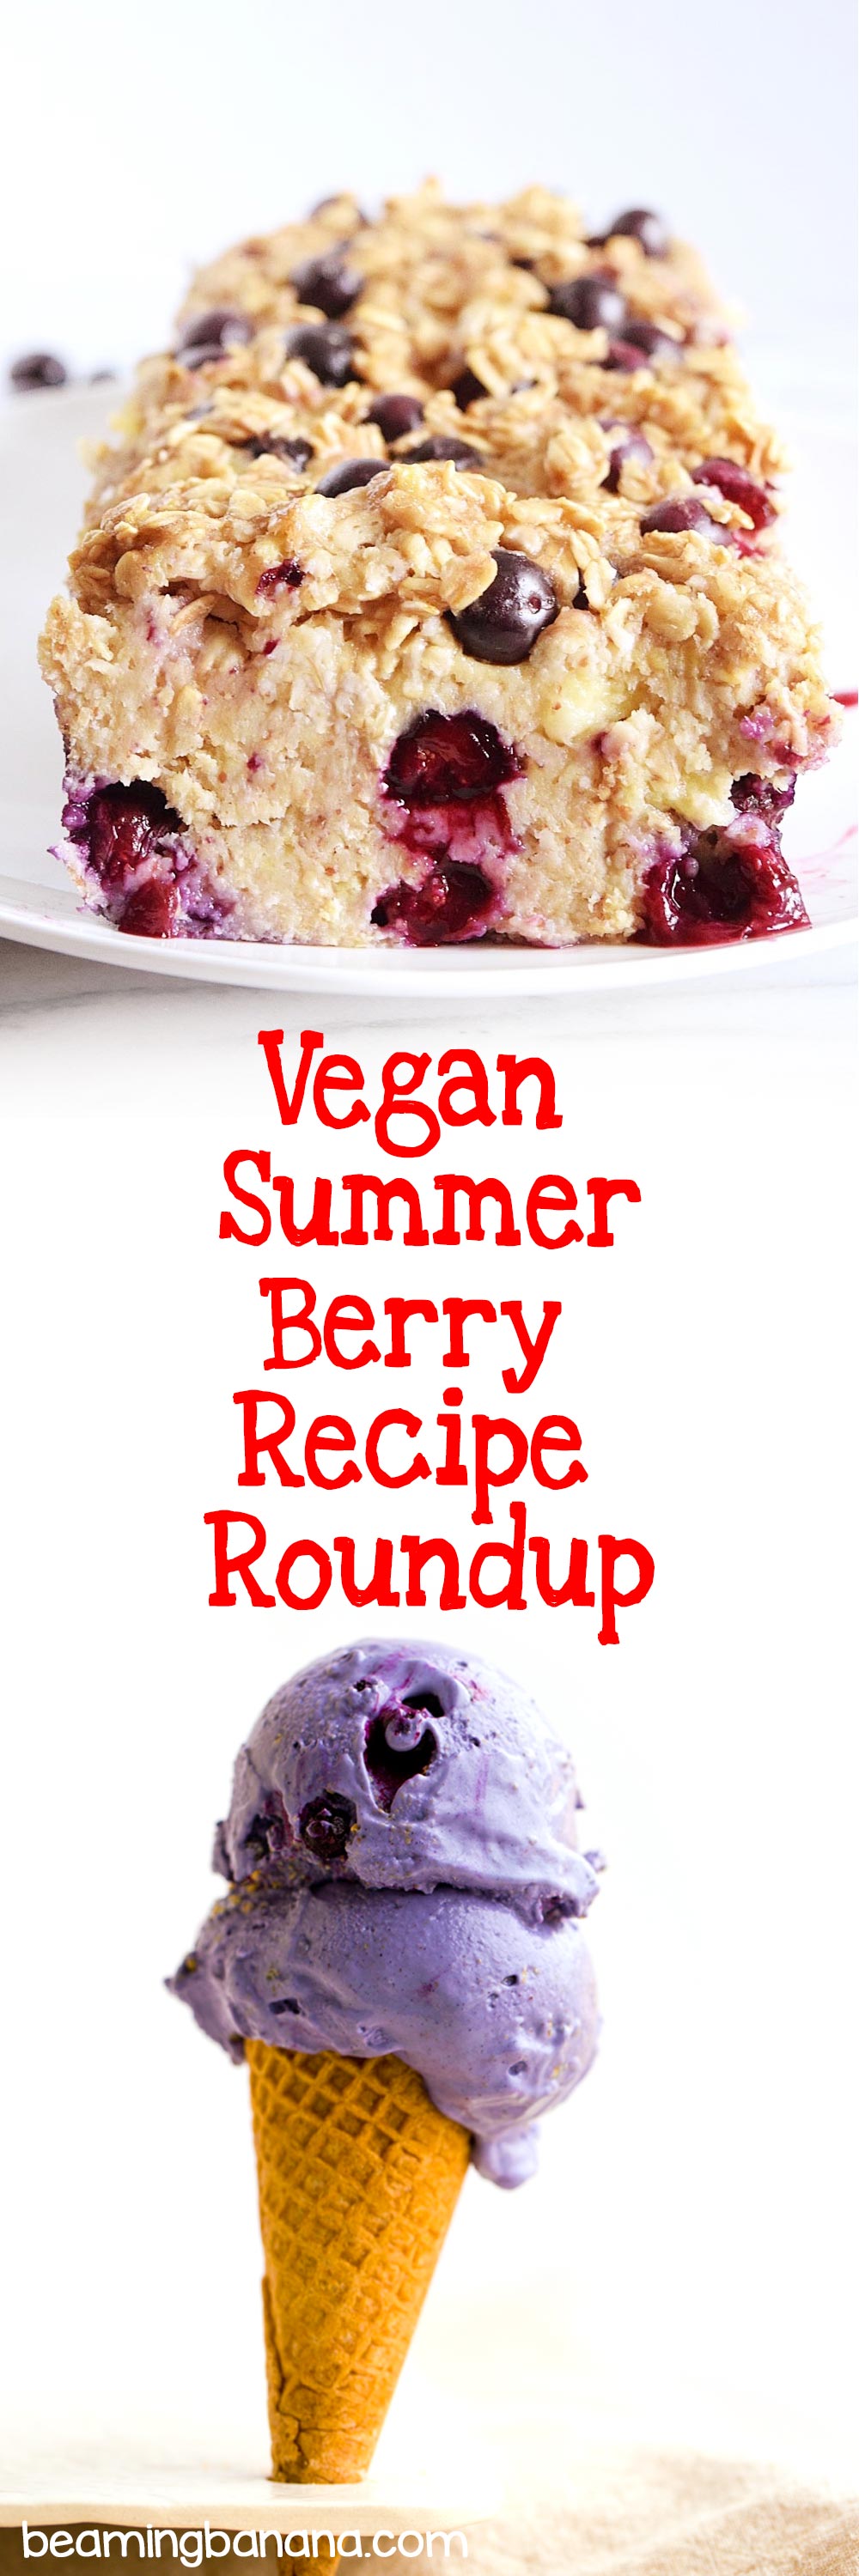 vegan summer berry recipes